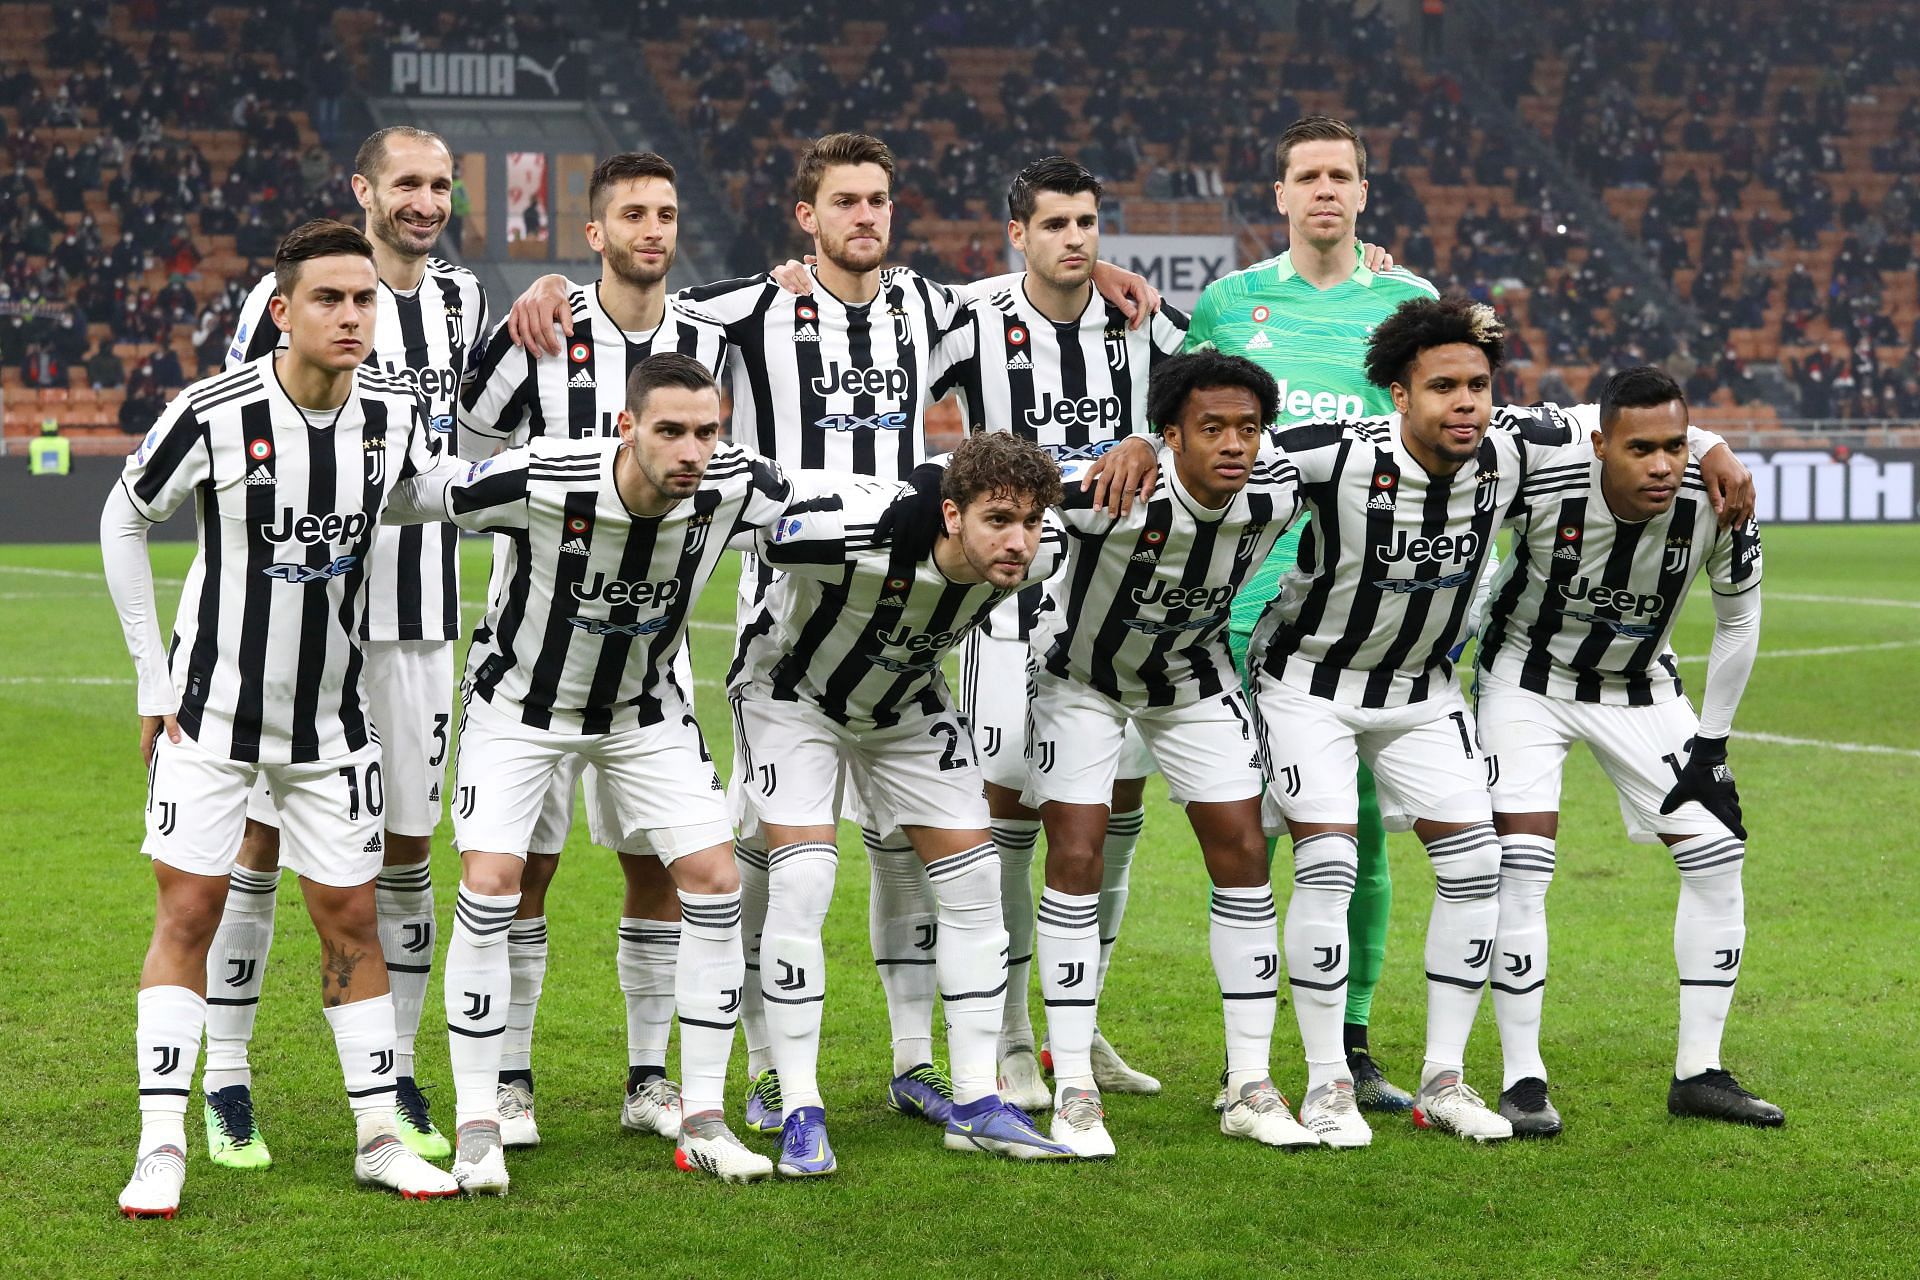 Juventus vs verona betting trends northern irish premier league betting preview